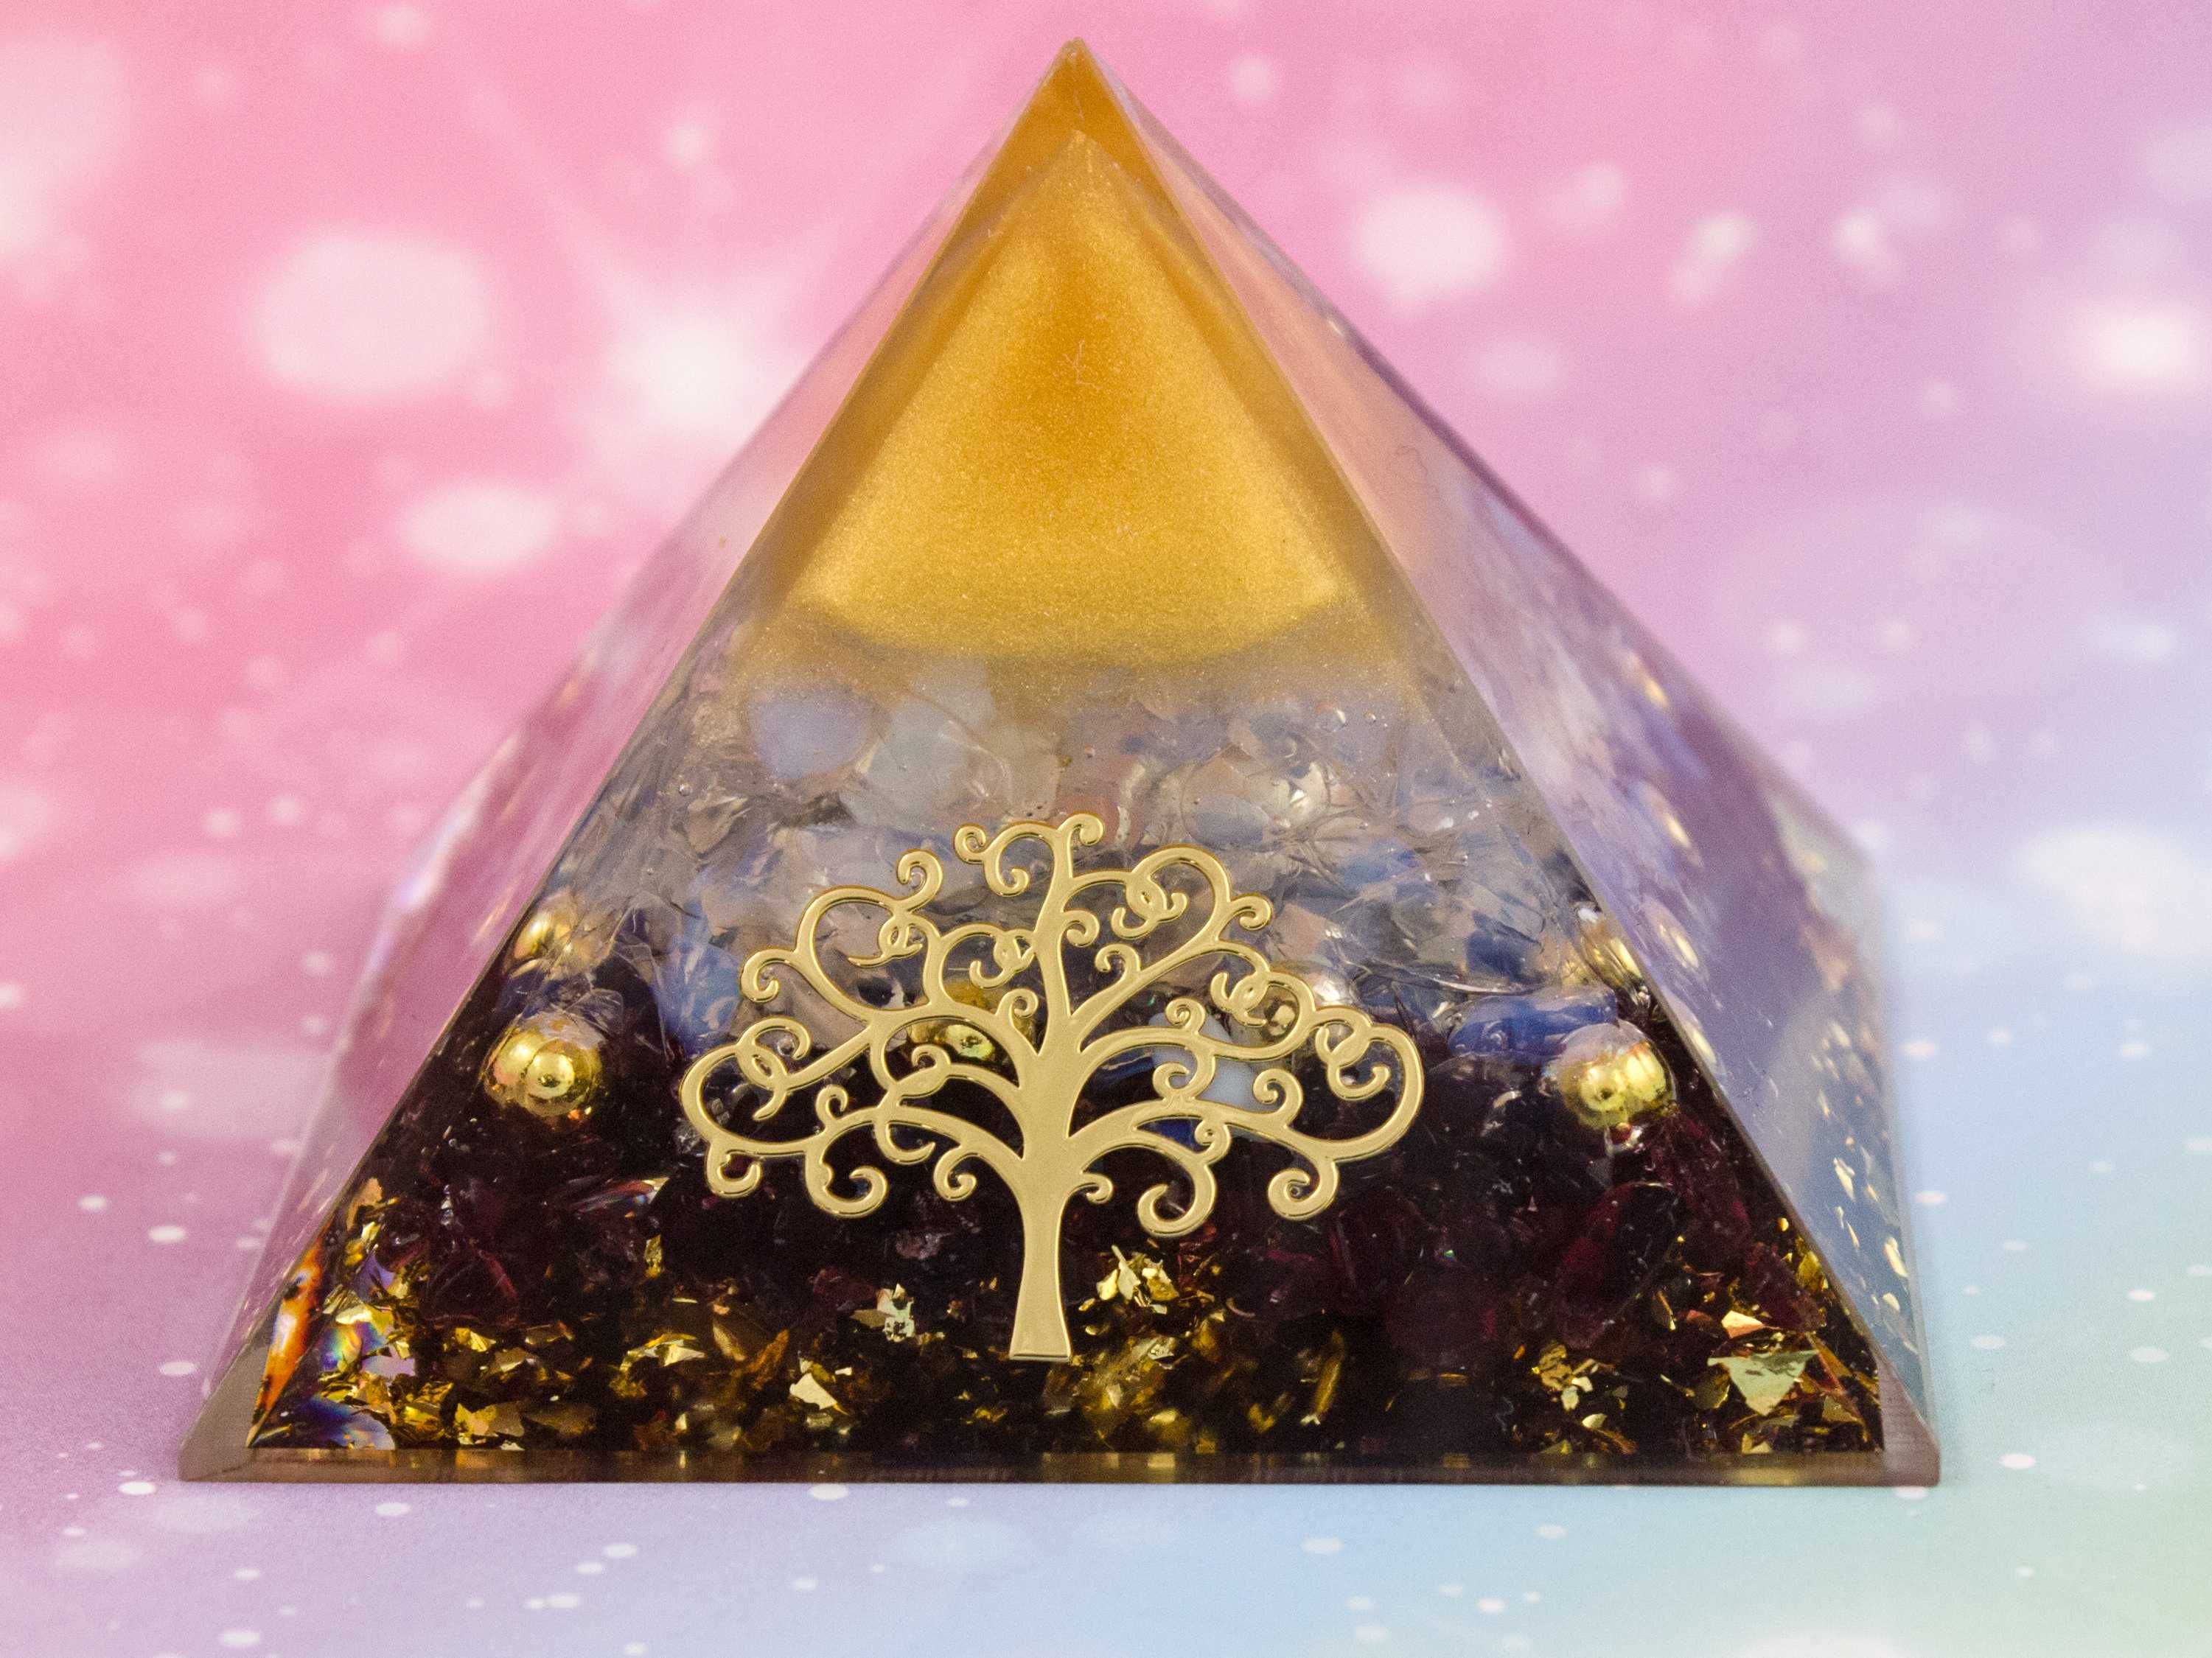 Piękna Piramidka Orgonit Granat Kryształ Żywica Złota Folia 7*5 cm